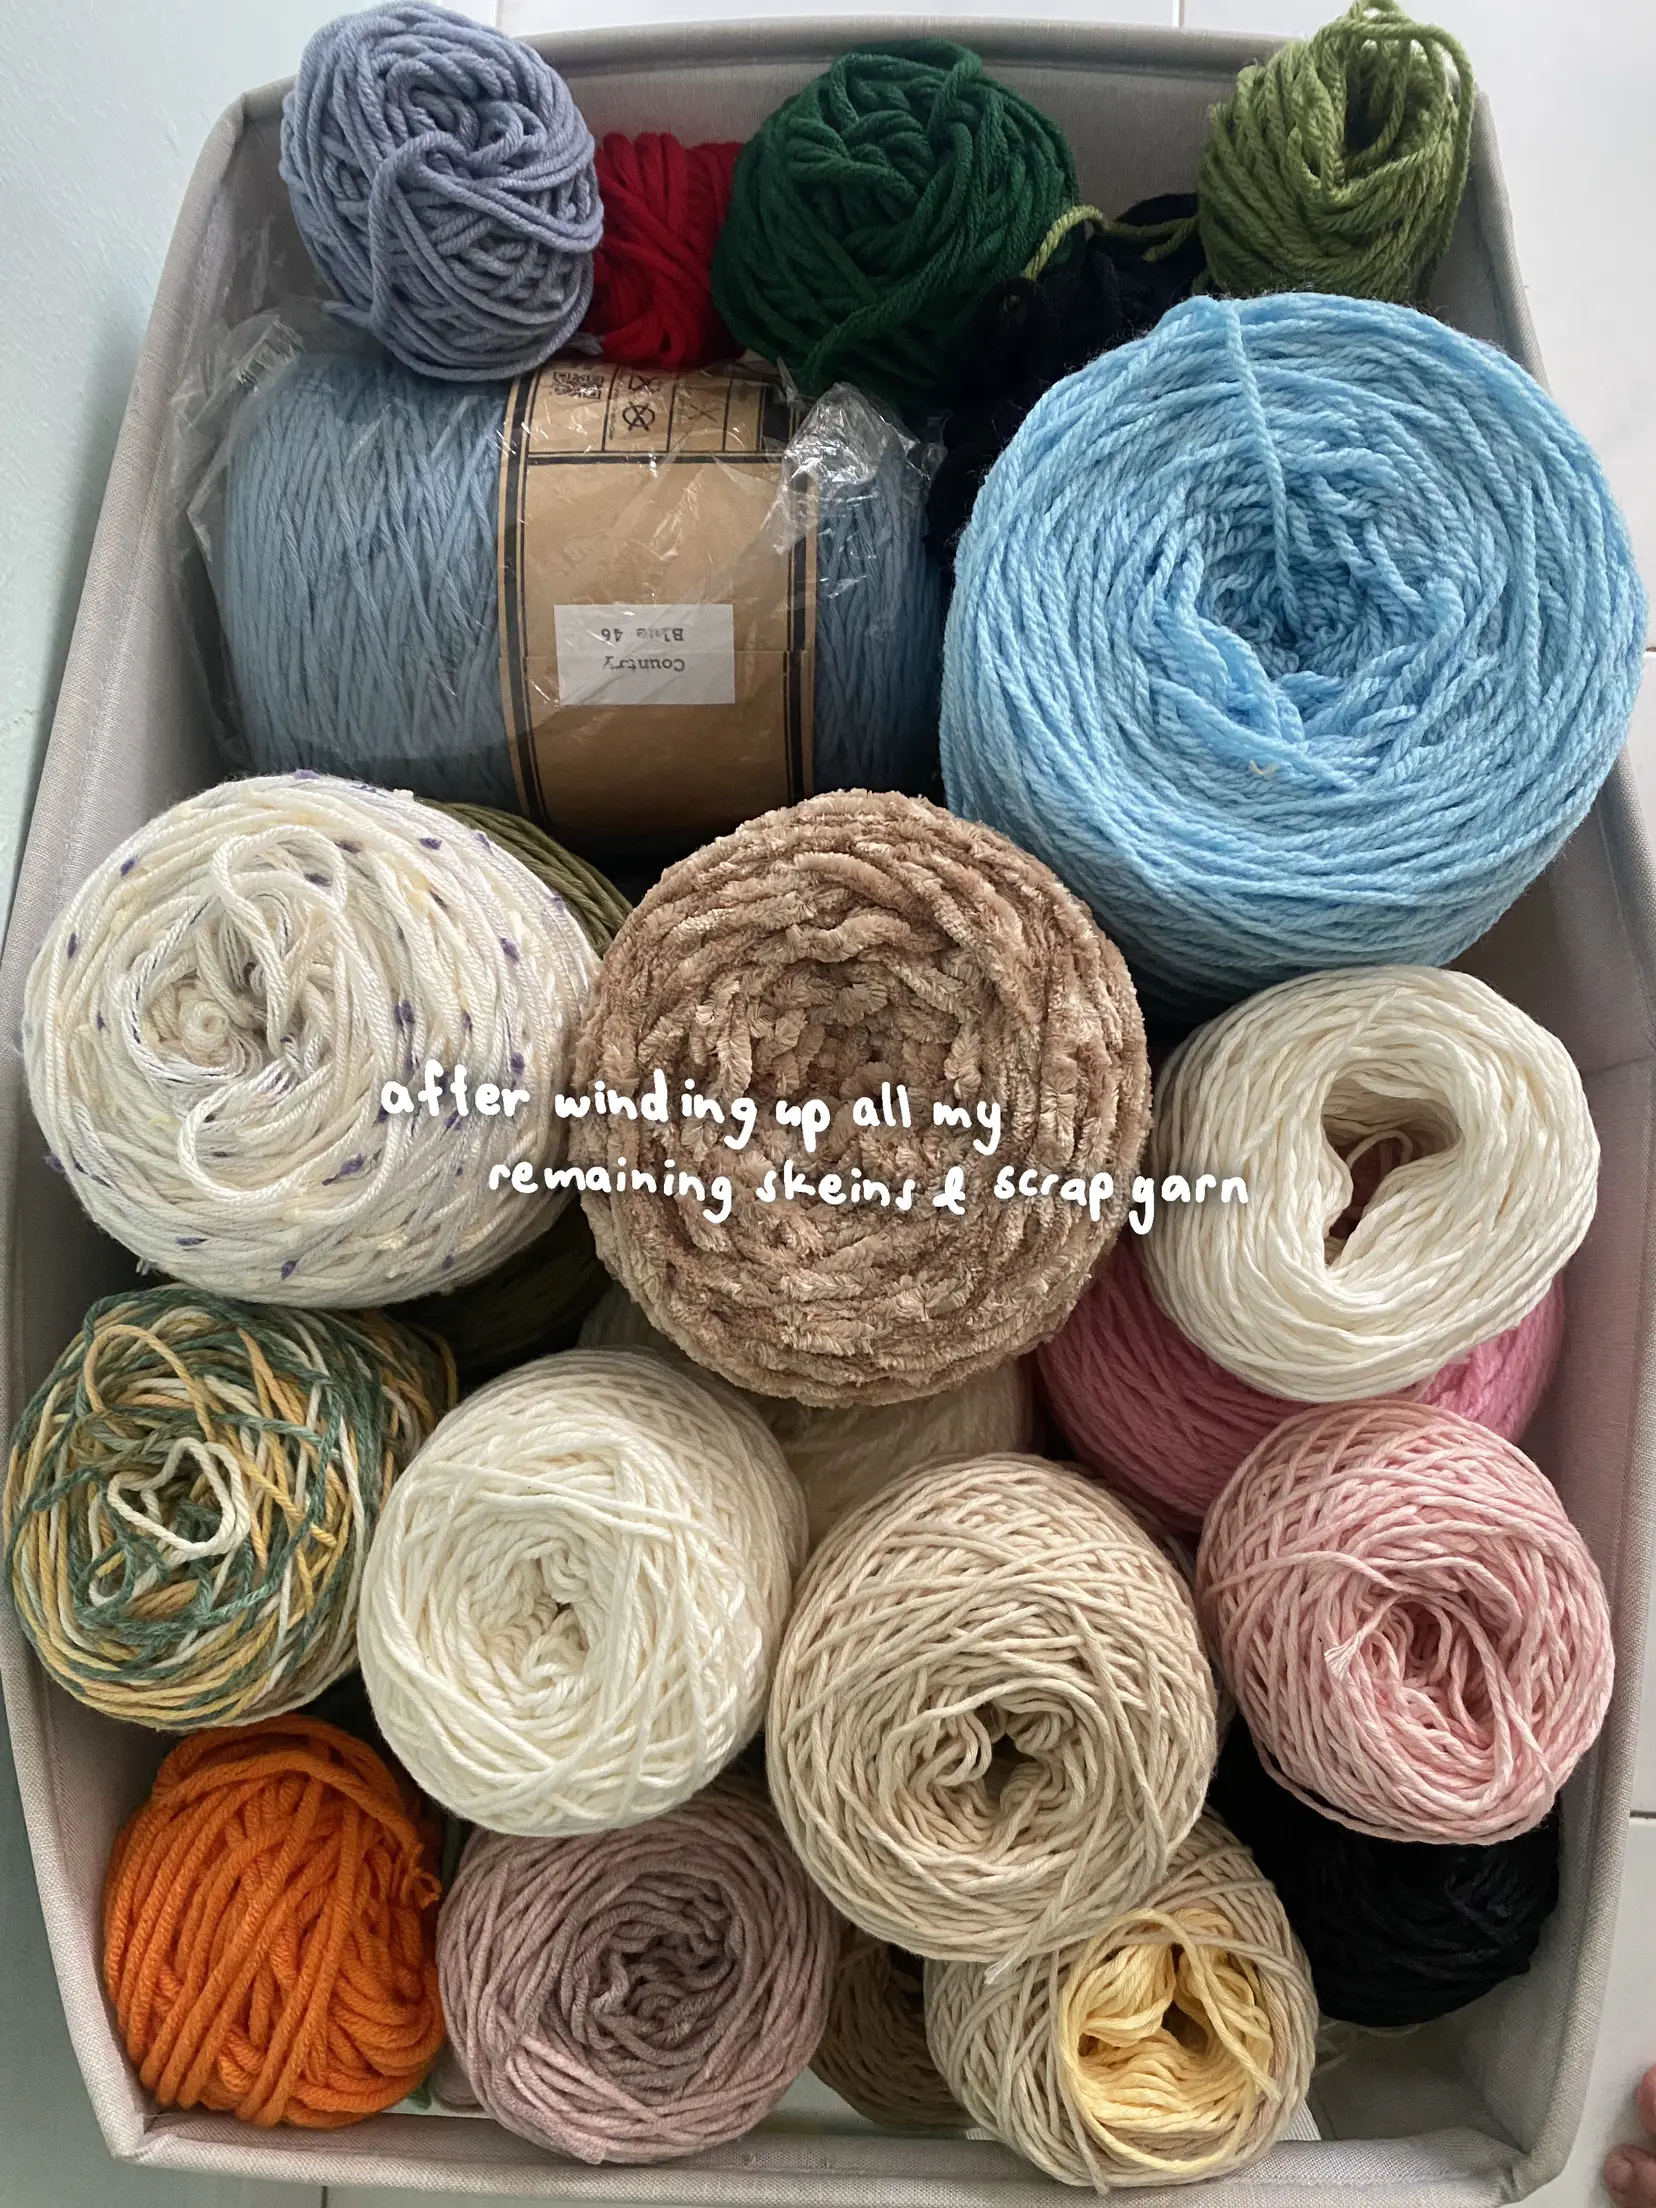 i got a yarn winder!, Gallery posted by ethanne 🦕